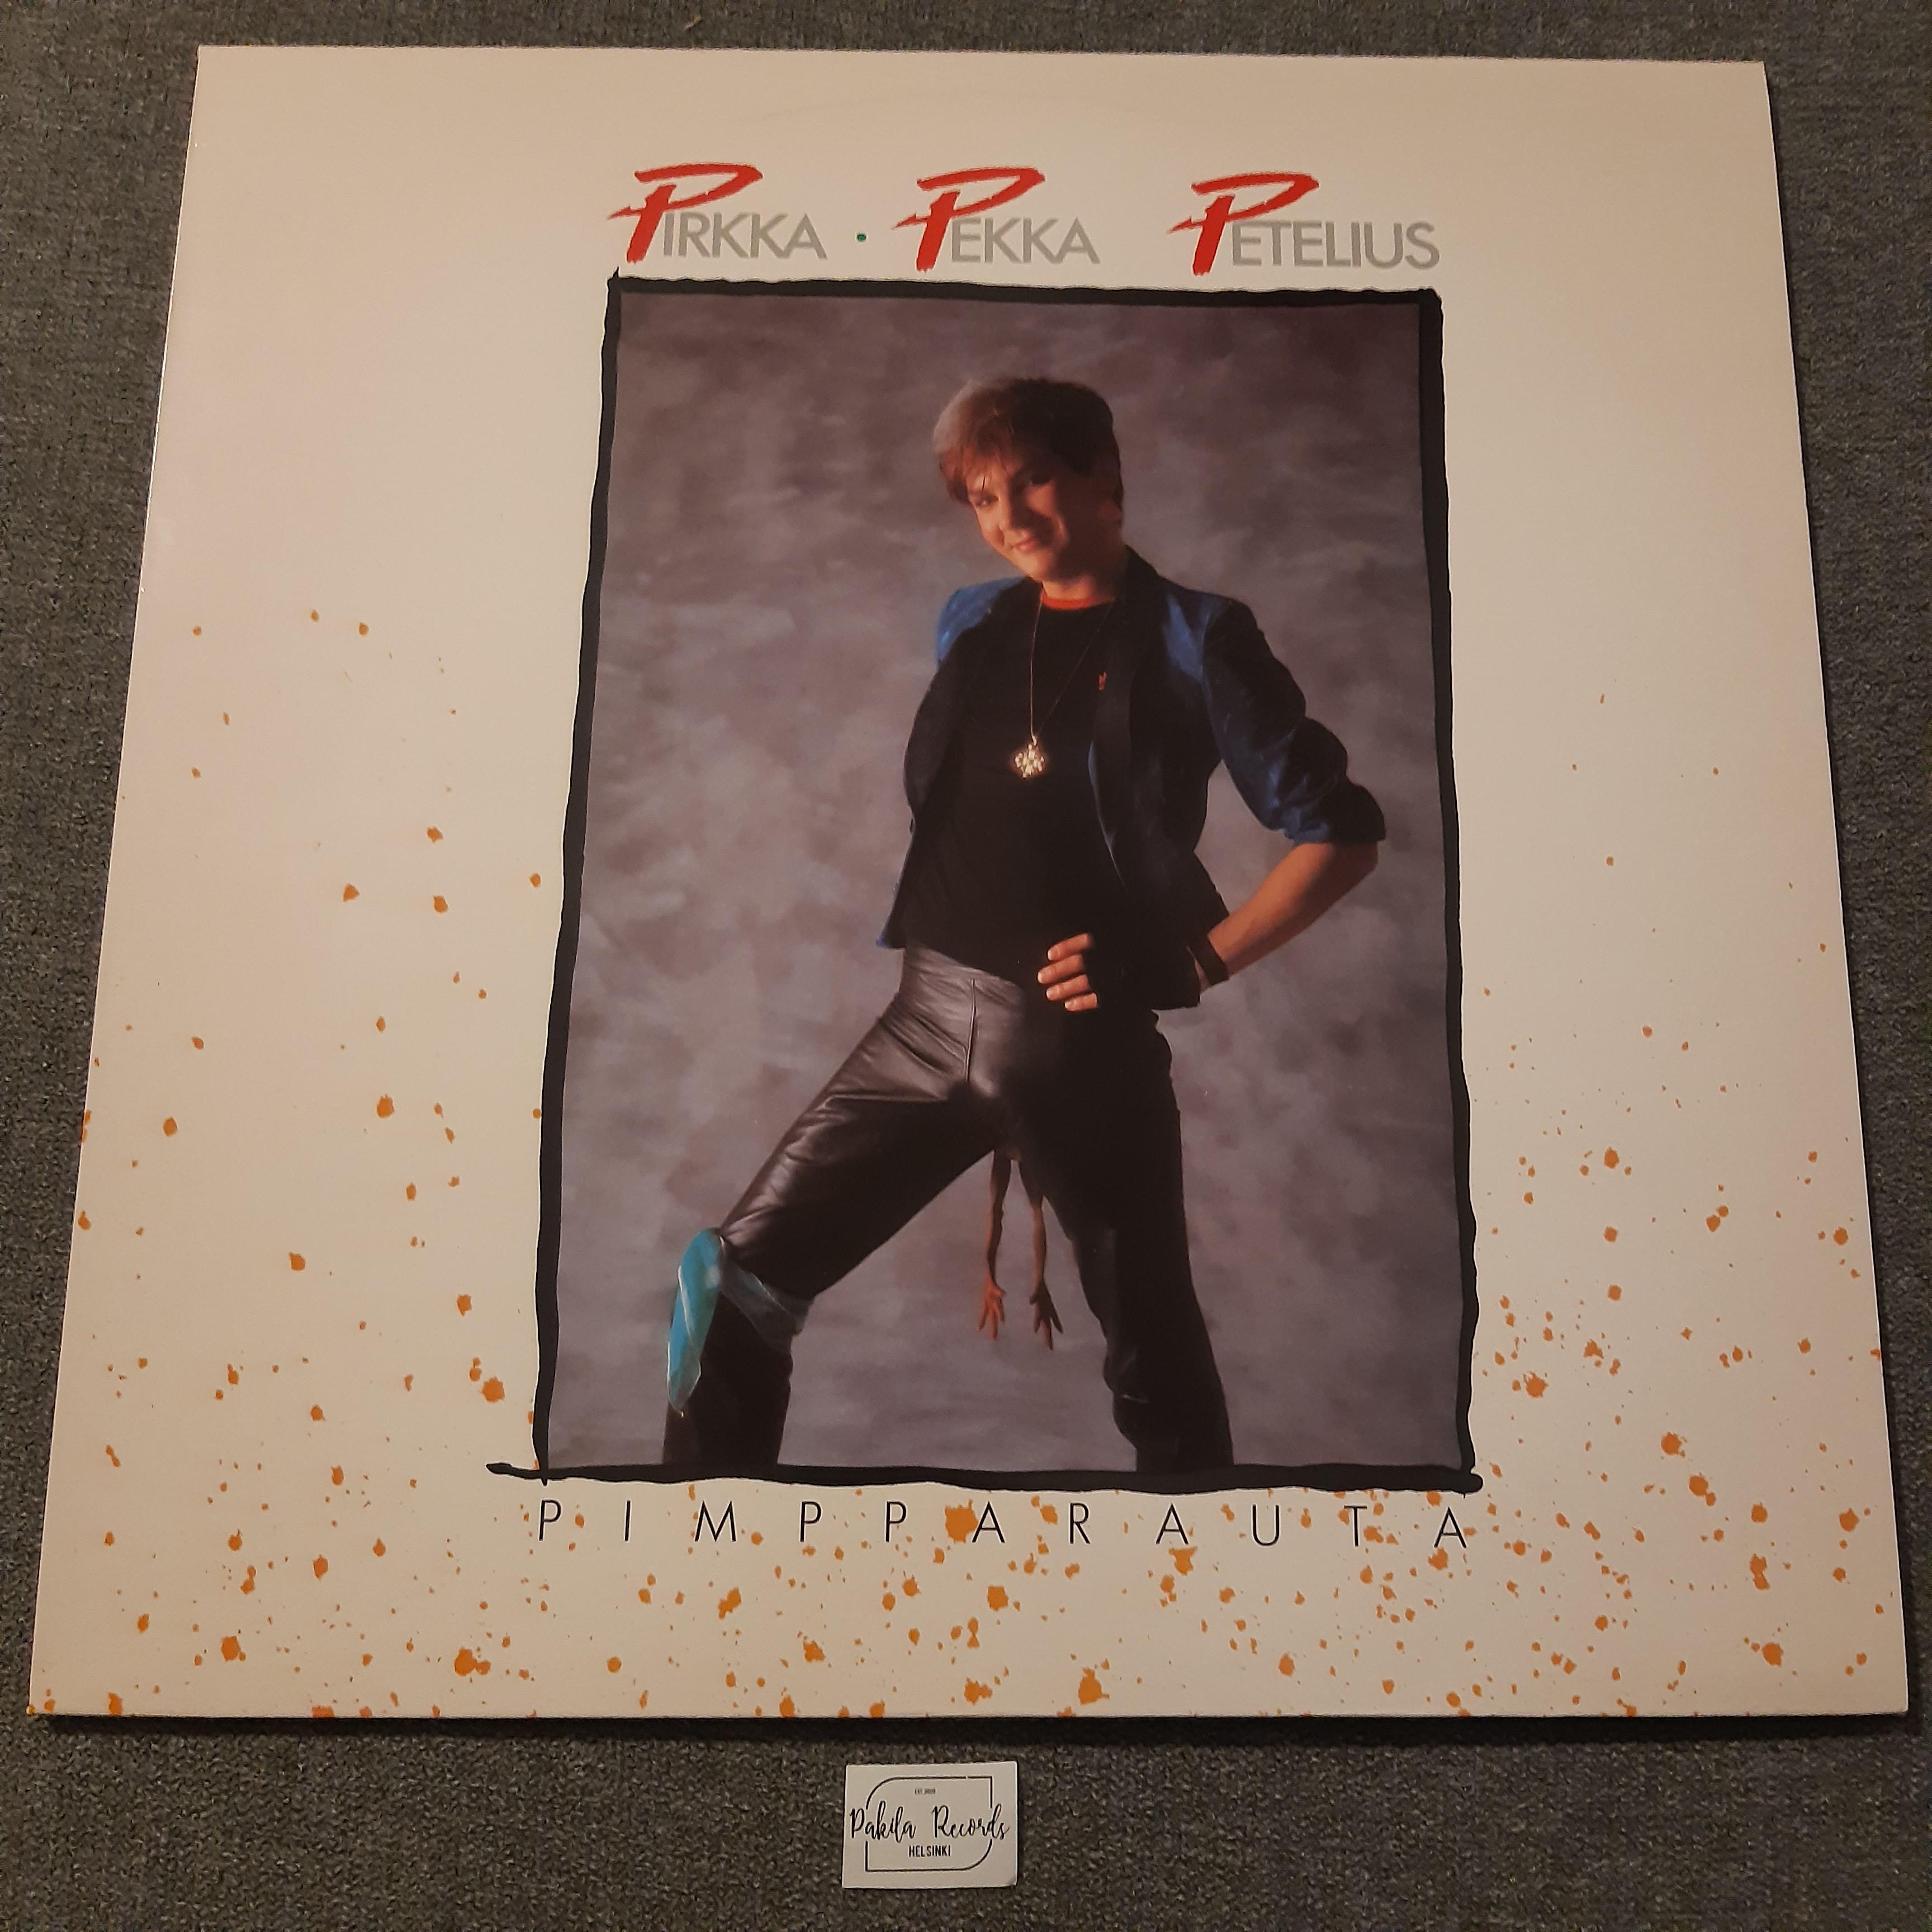 Pirkka-Pekka Petelius - Pimpparauta - LP (käytetty)